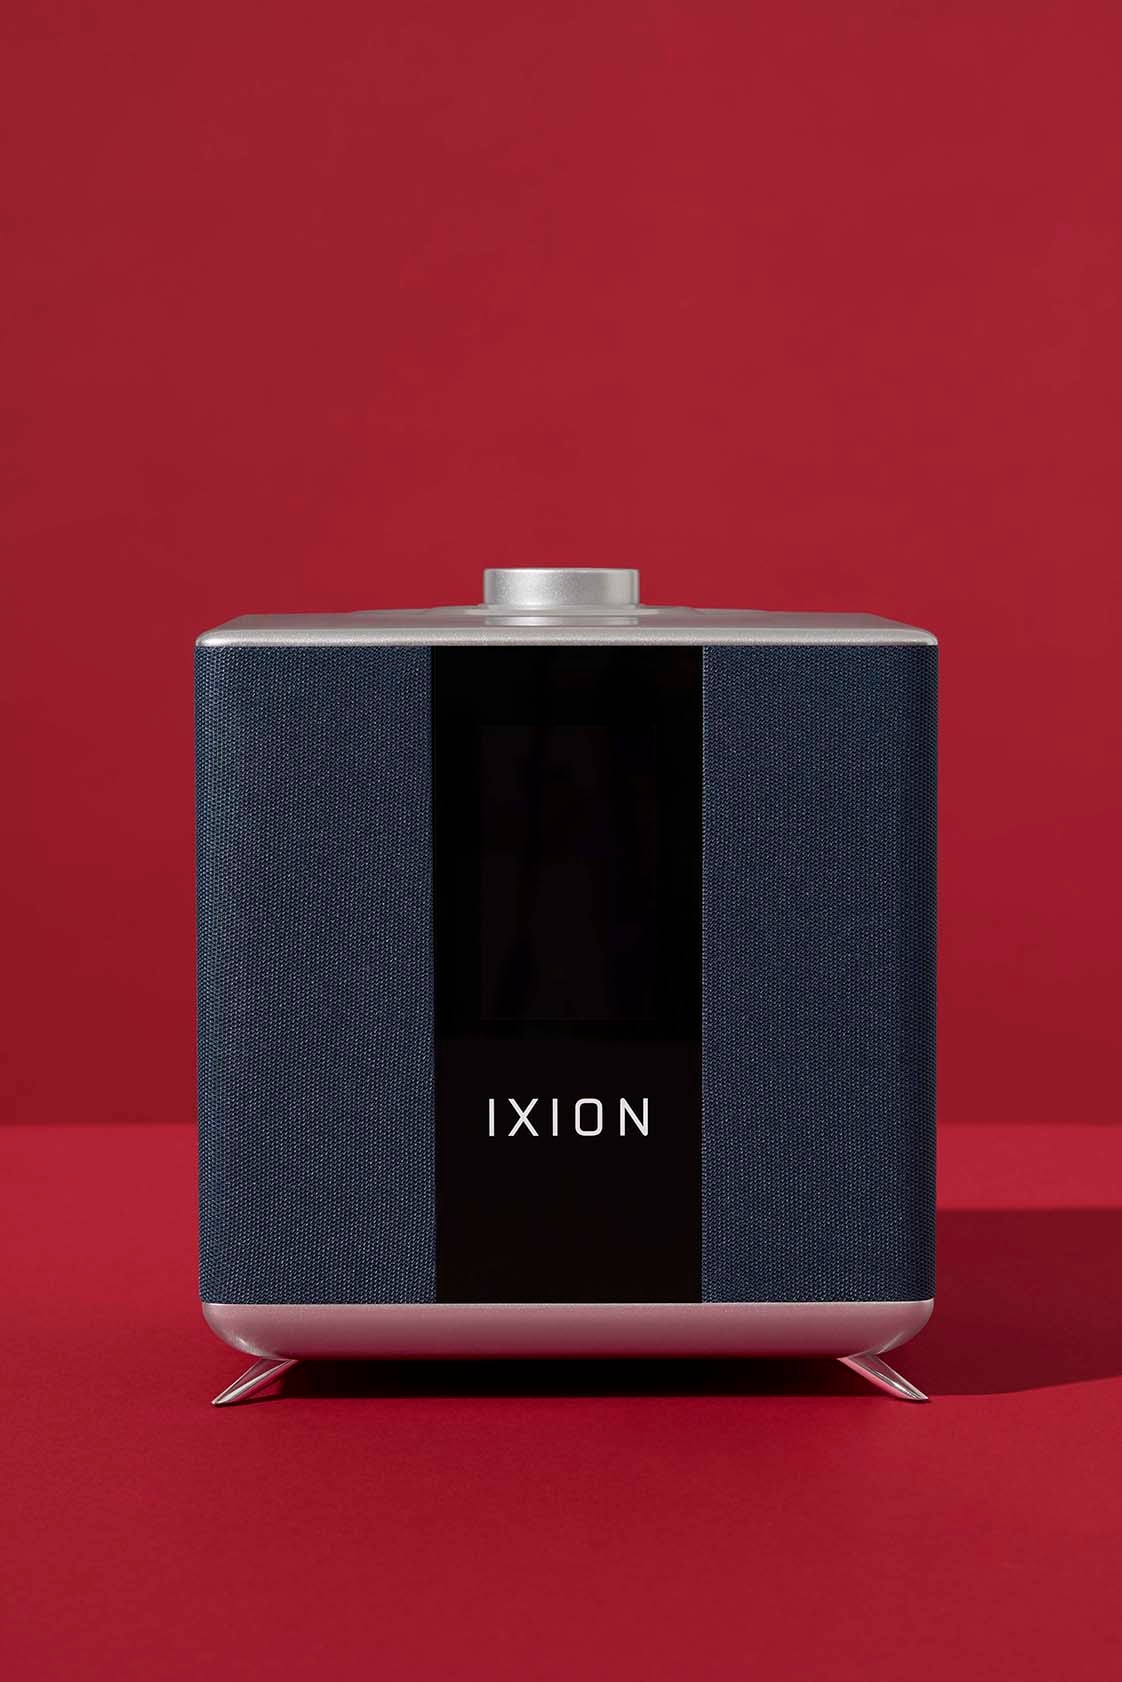 Ixion Hi-fi 2.0 PLC Audio System Bluetooth Multi-Room Speakers Connectivity